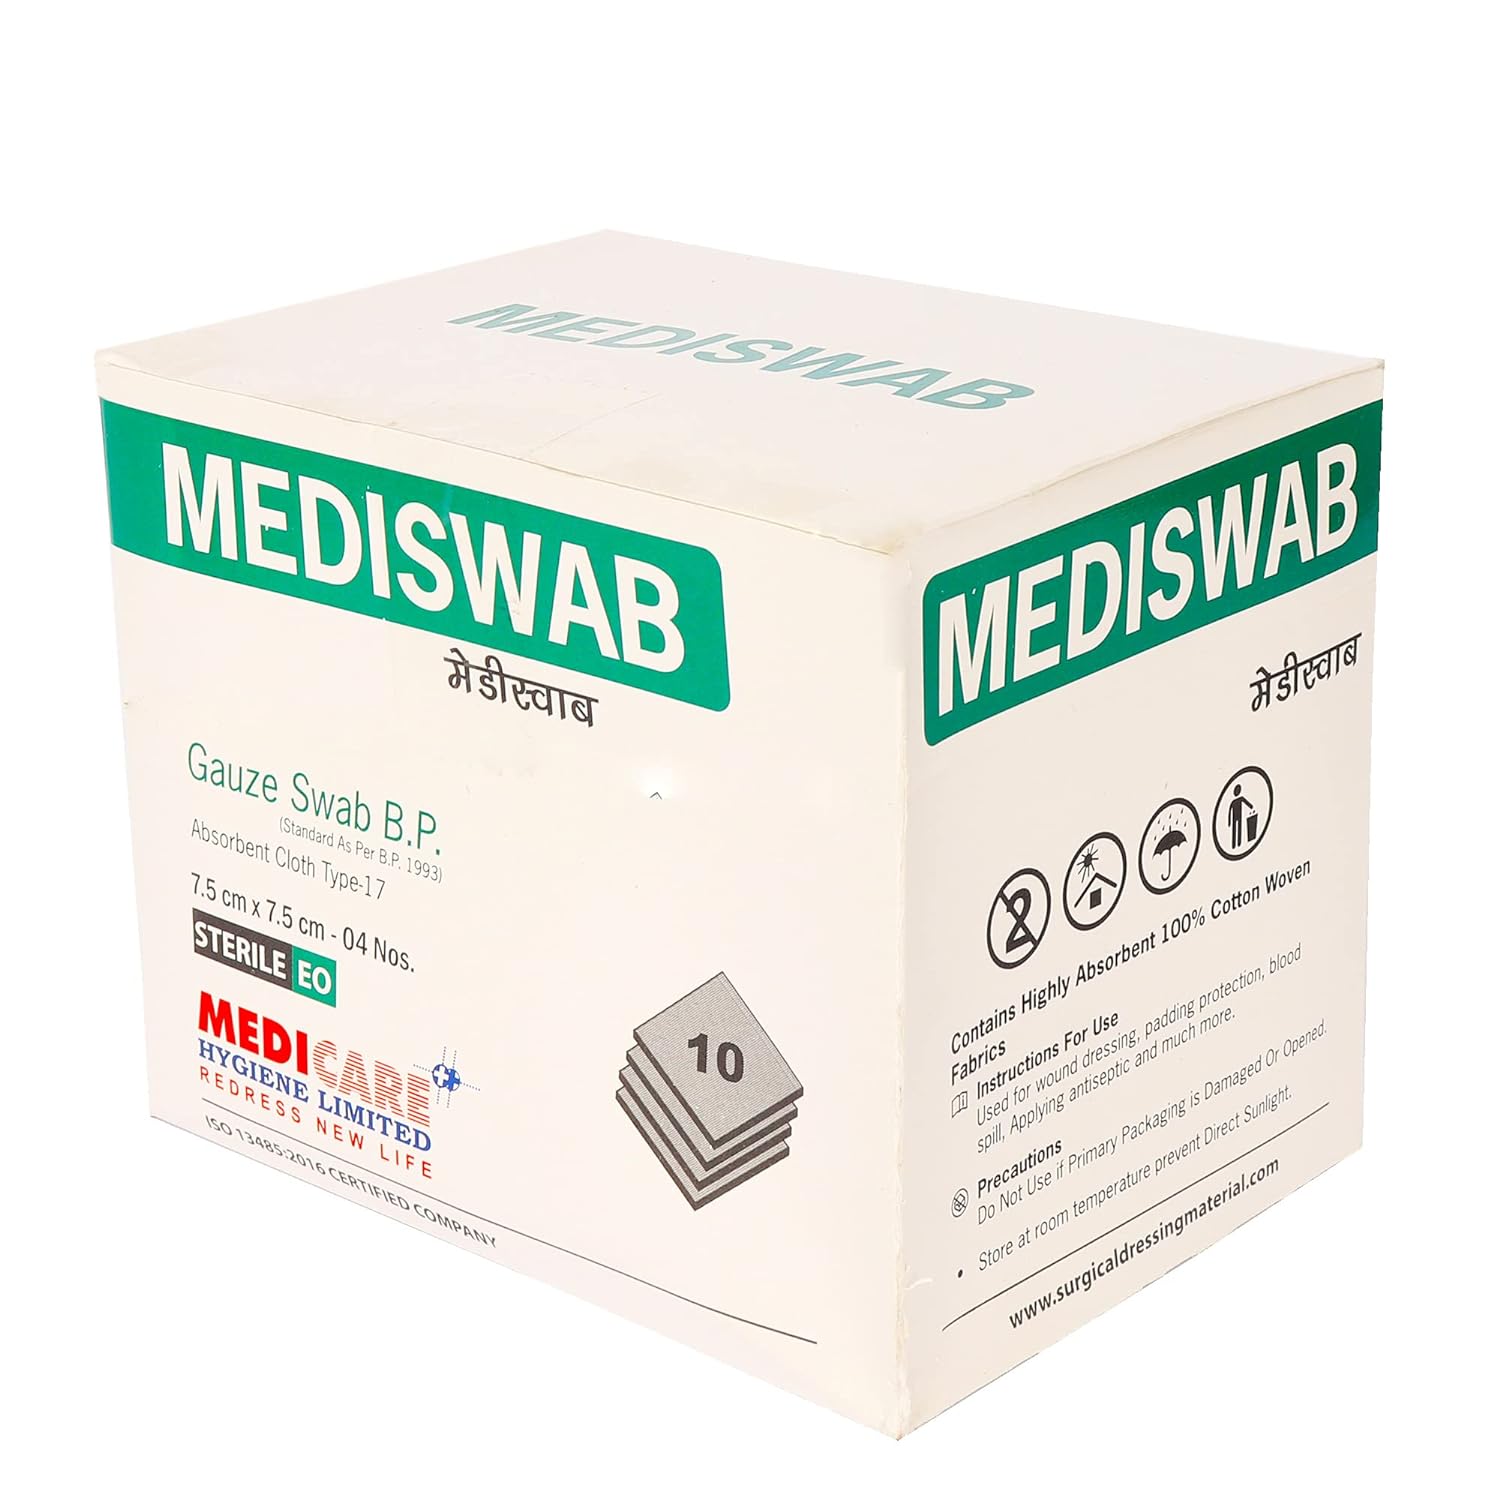 Medica Mediswab Gauze Swab (7.5cm X 7.5cm, 8 Ply)-10 Packs of 4 pcs each